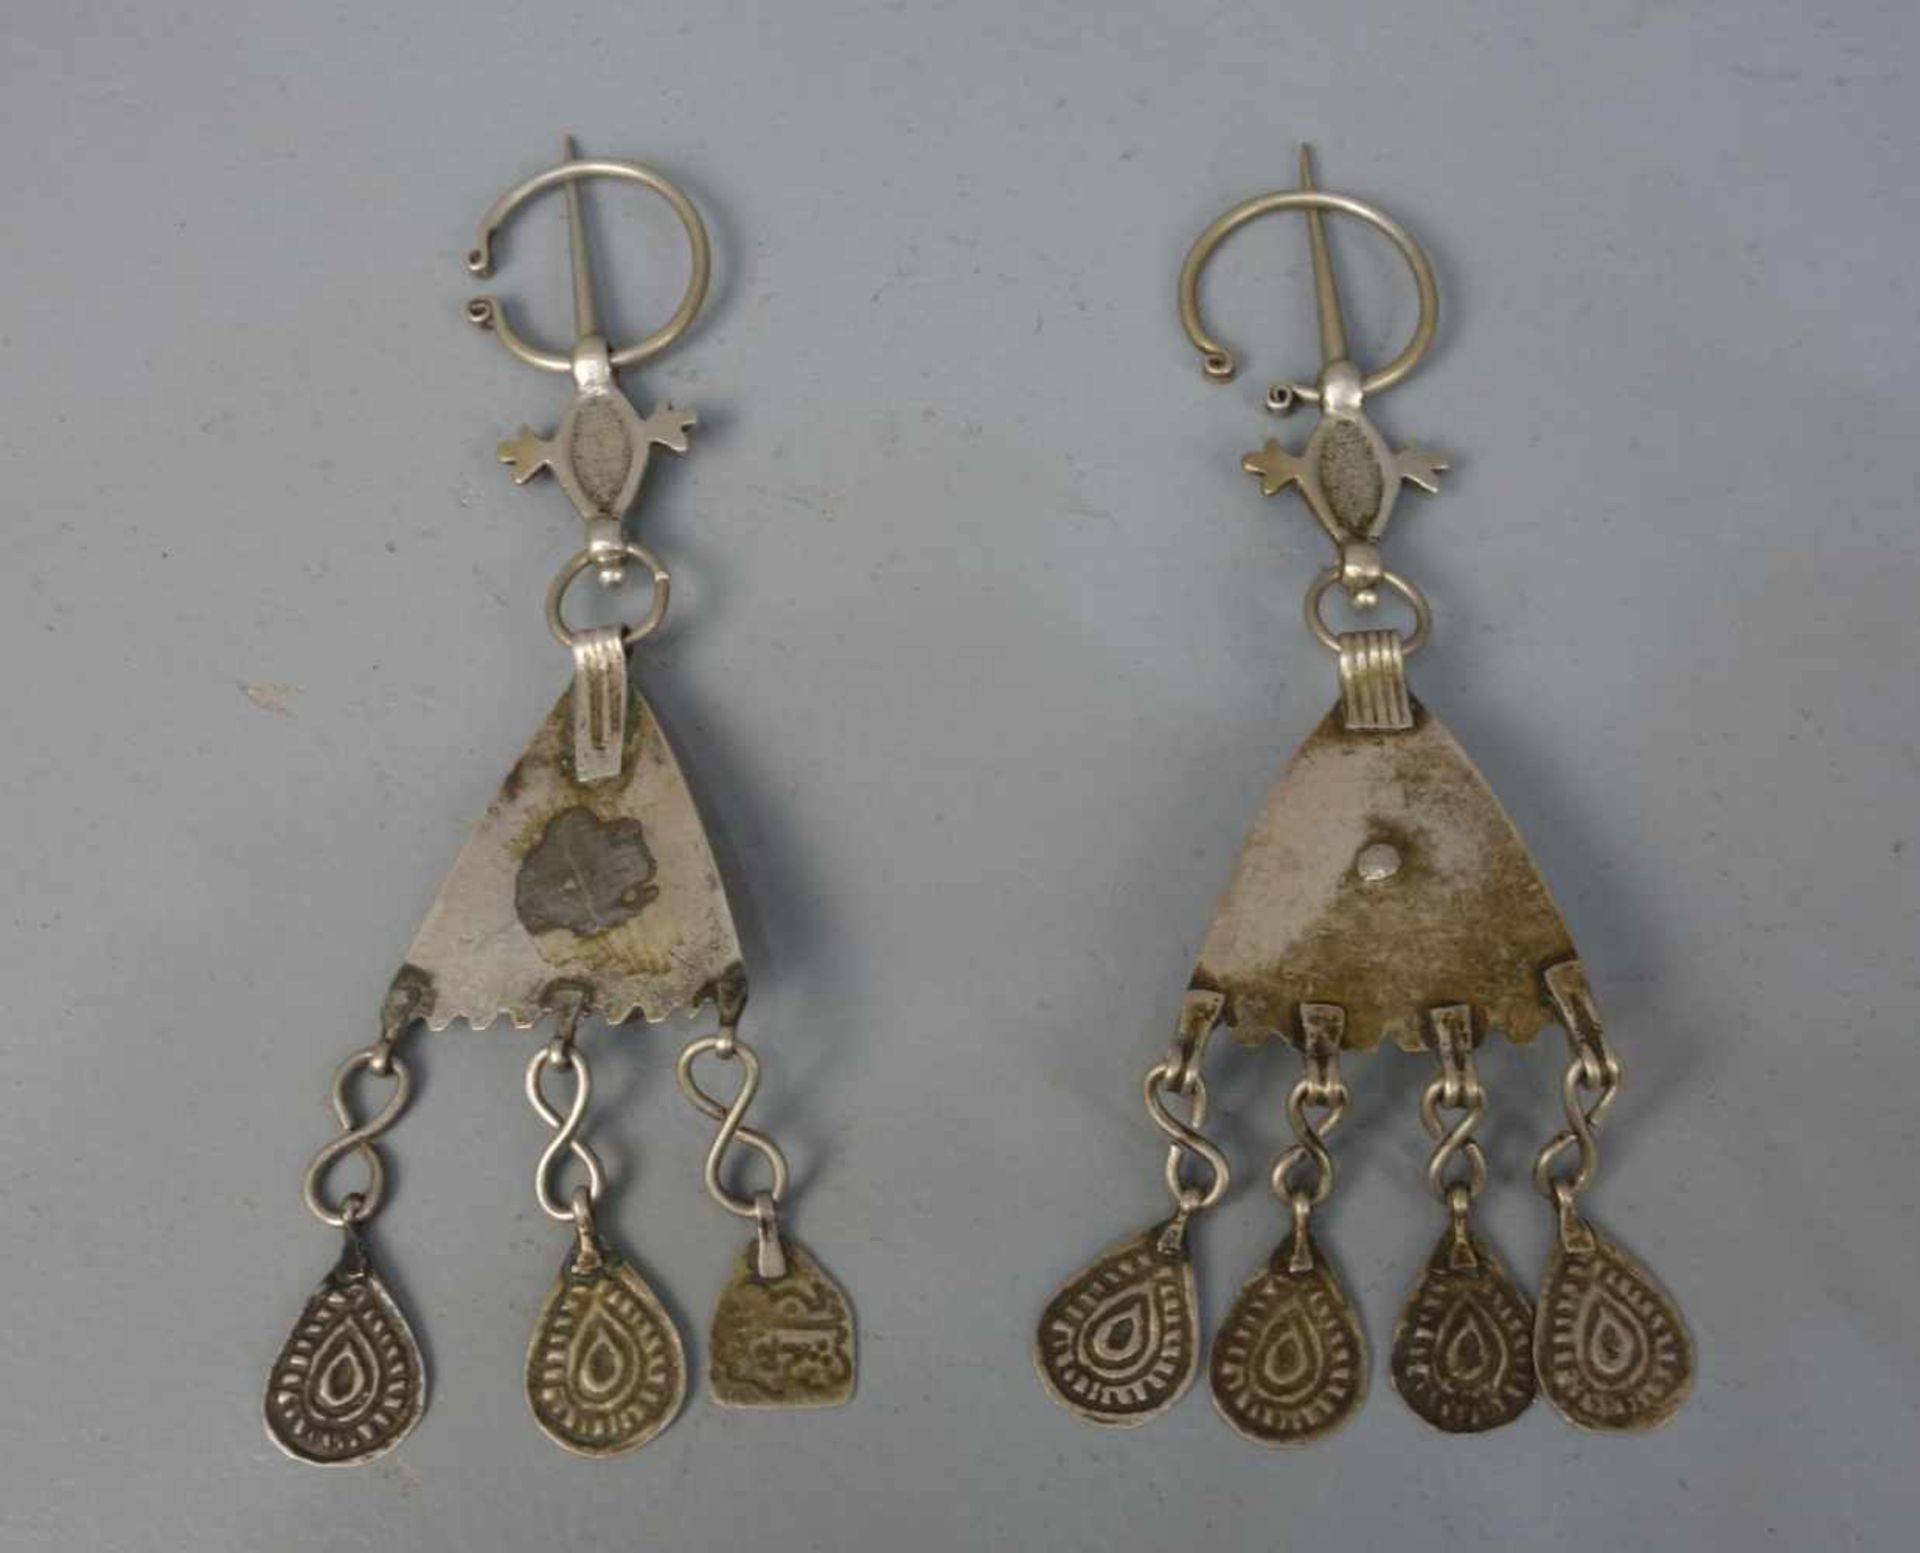 BERBER-SCHMUCK: FIBELPAAR / oriental accessoires, Midelt / Marokko, wohl Silber (63 g). Fibeln mit - Bild 2 aus 2